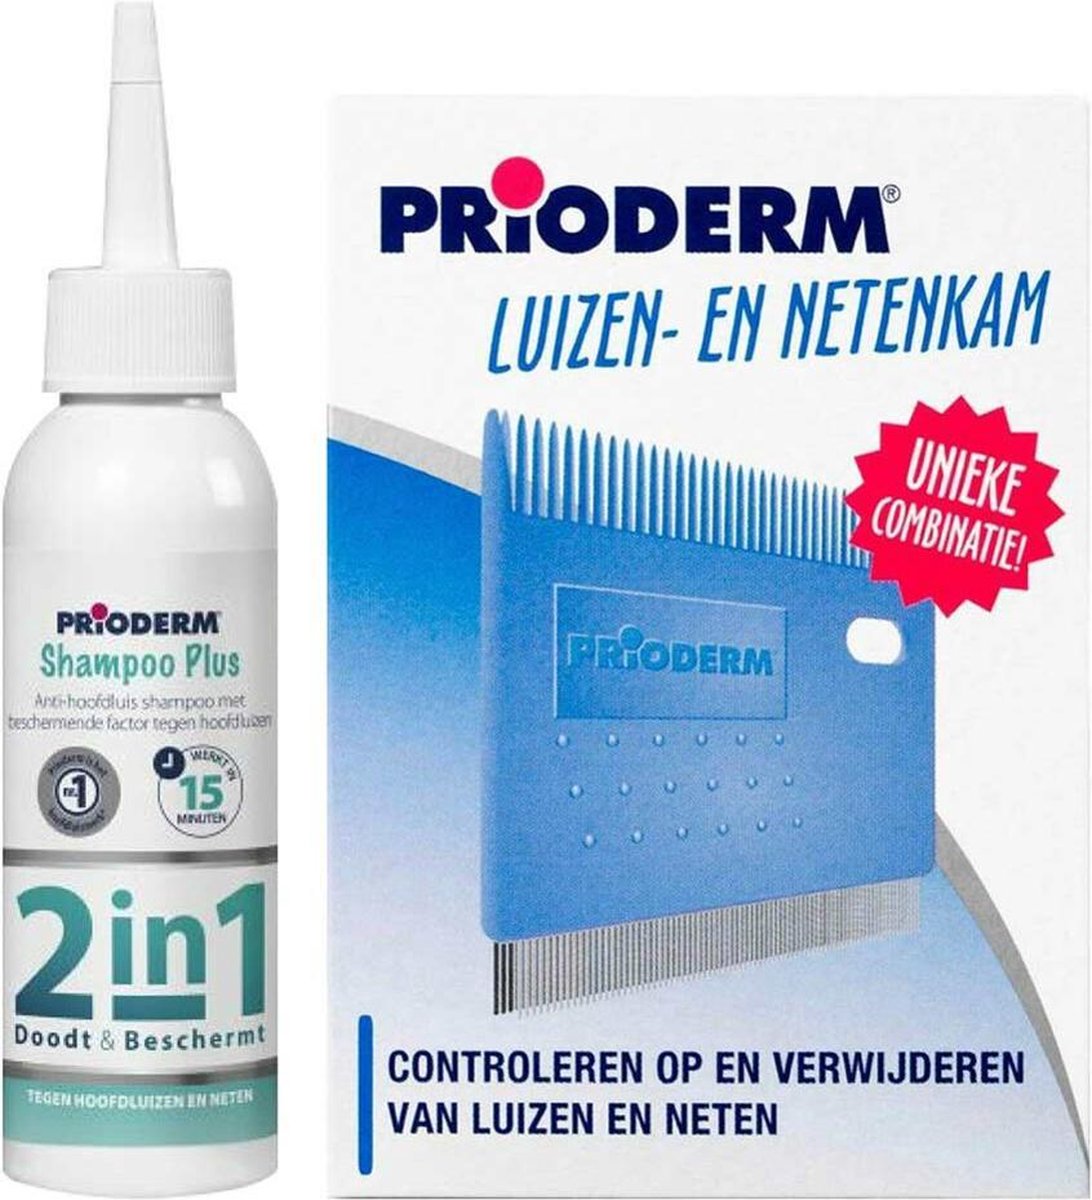 Prioderm Shampoo Plus + Luizen- en Netenkam Pakket | bol.com